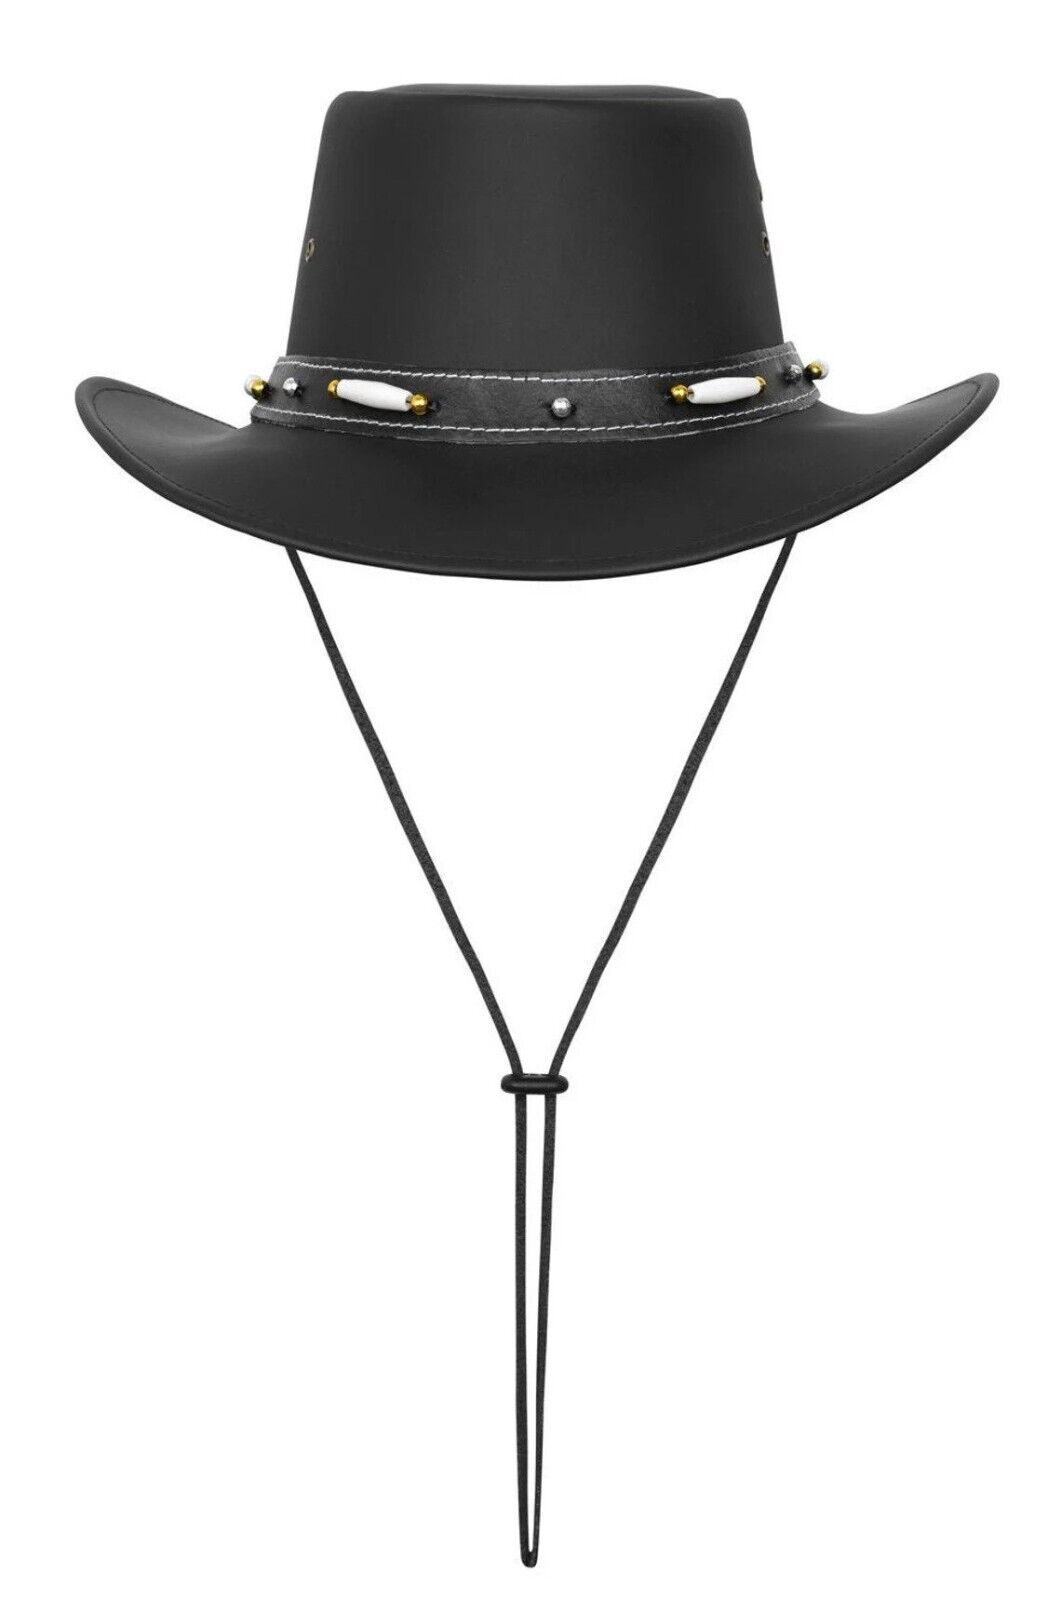 Australian Bush Hat Black Leather Cowboy Western